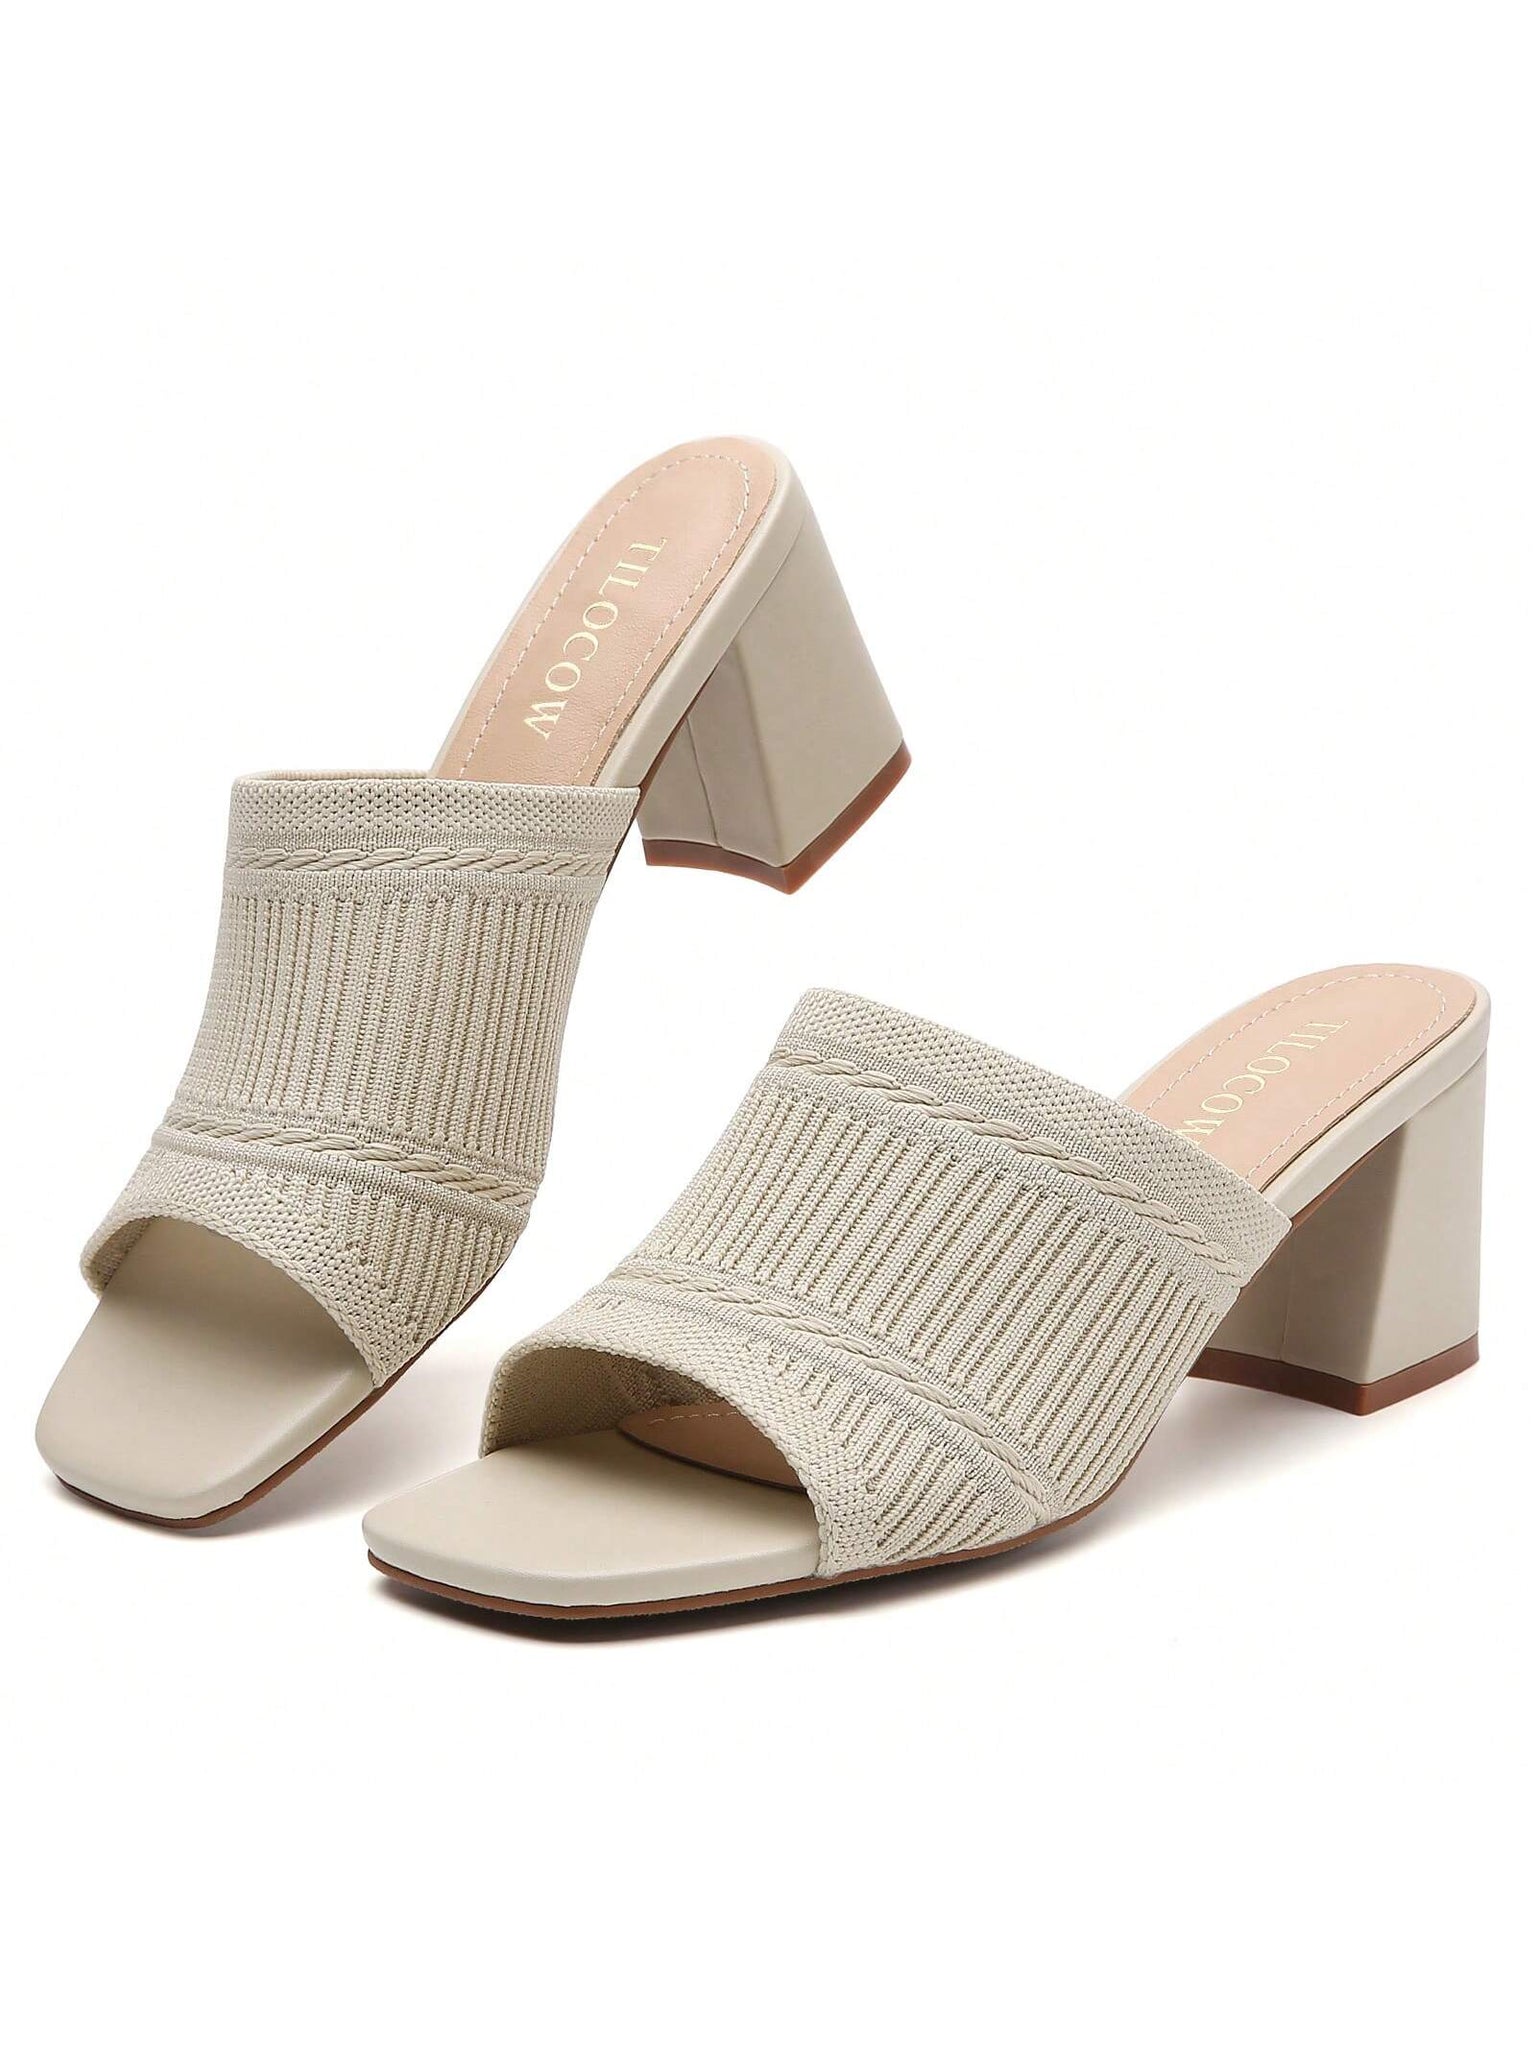 Tilocow Knit Heeled Sandals Chunky Low Block Heel Mules For Women Square Open Toe Heels Slip On Breathable Slides Sandal-Beige-2